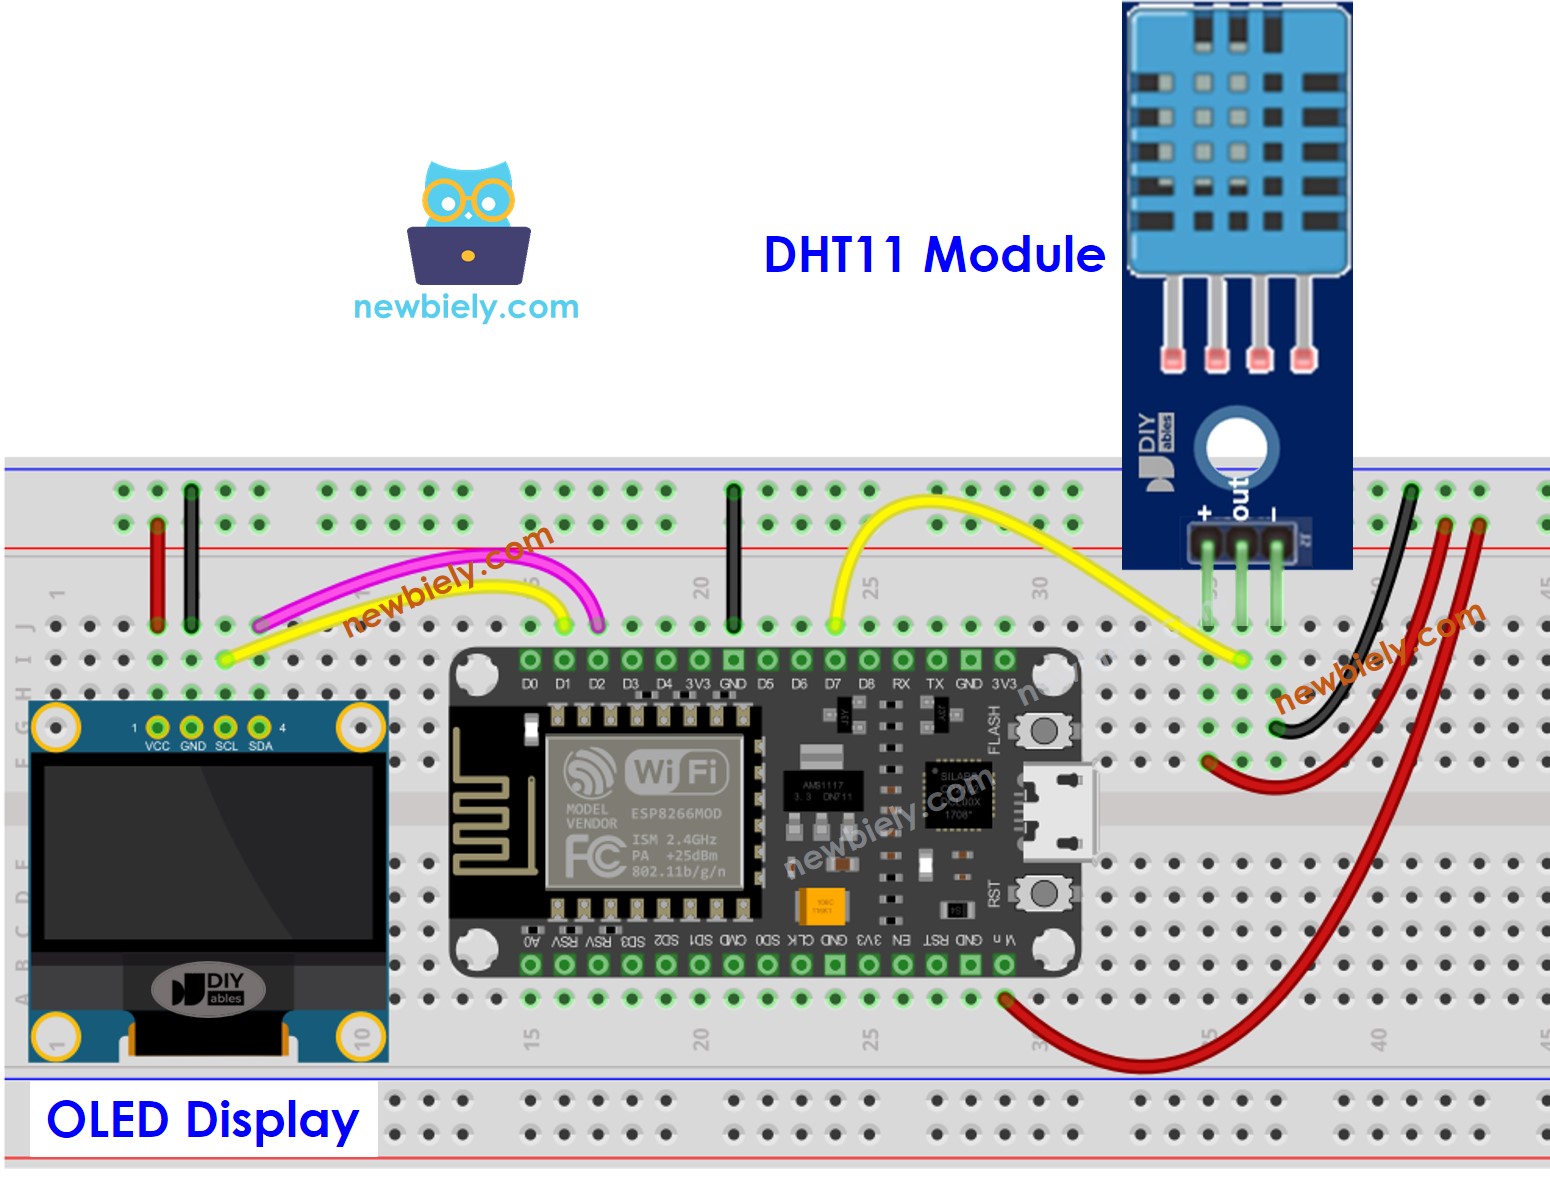 The wiring diagram between ESP8266 NodeMCU and DHT11 Sensor OLED